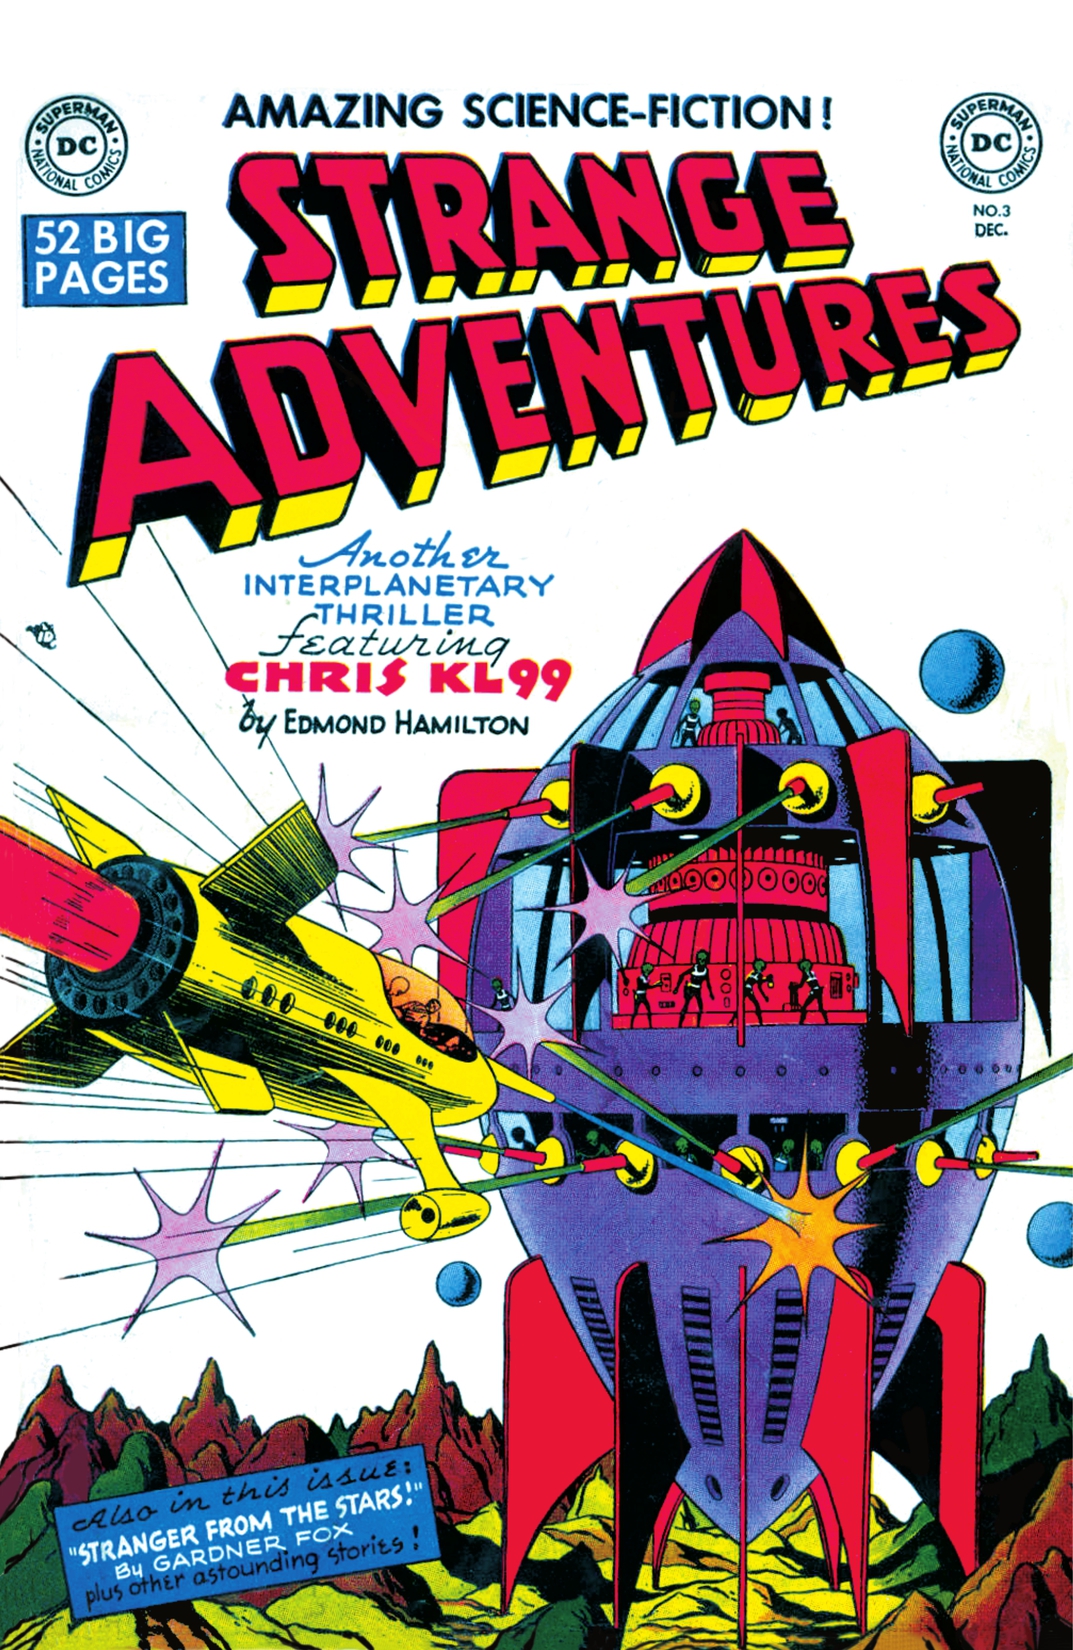 Strange Adventures (1950-1973) #3 preview images